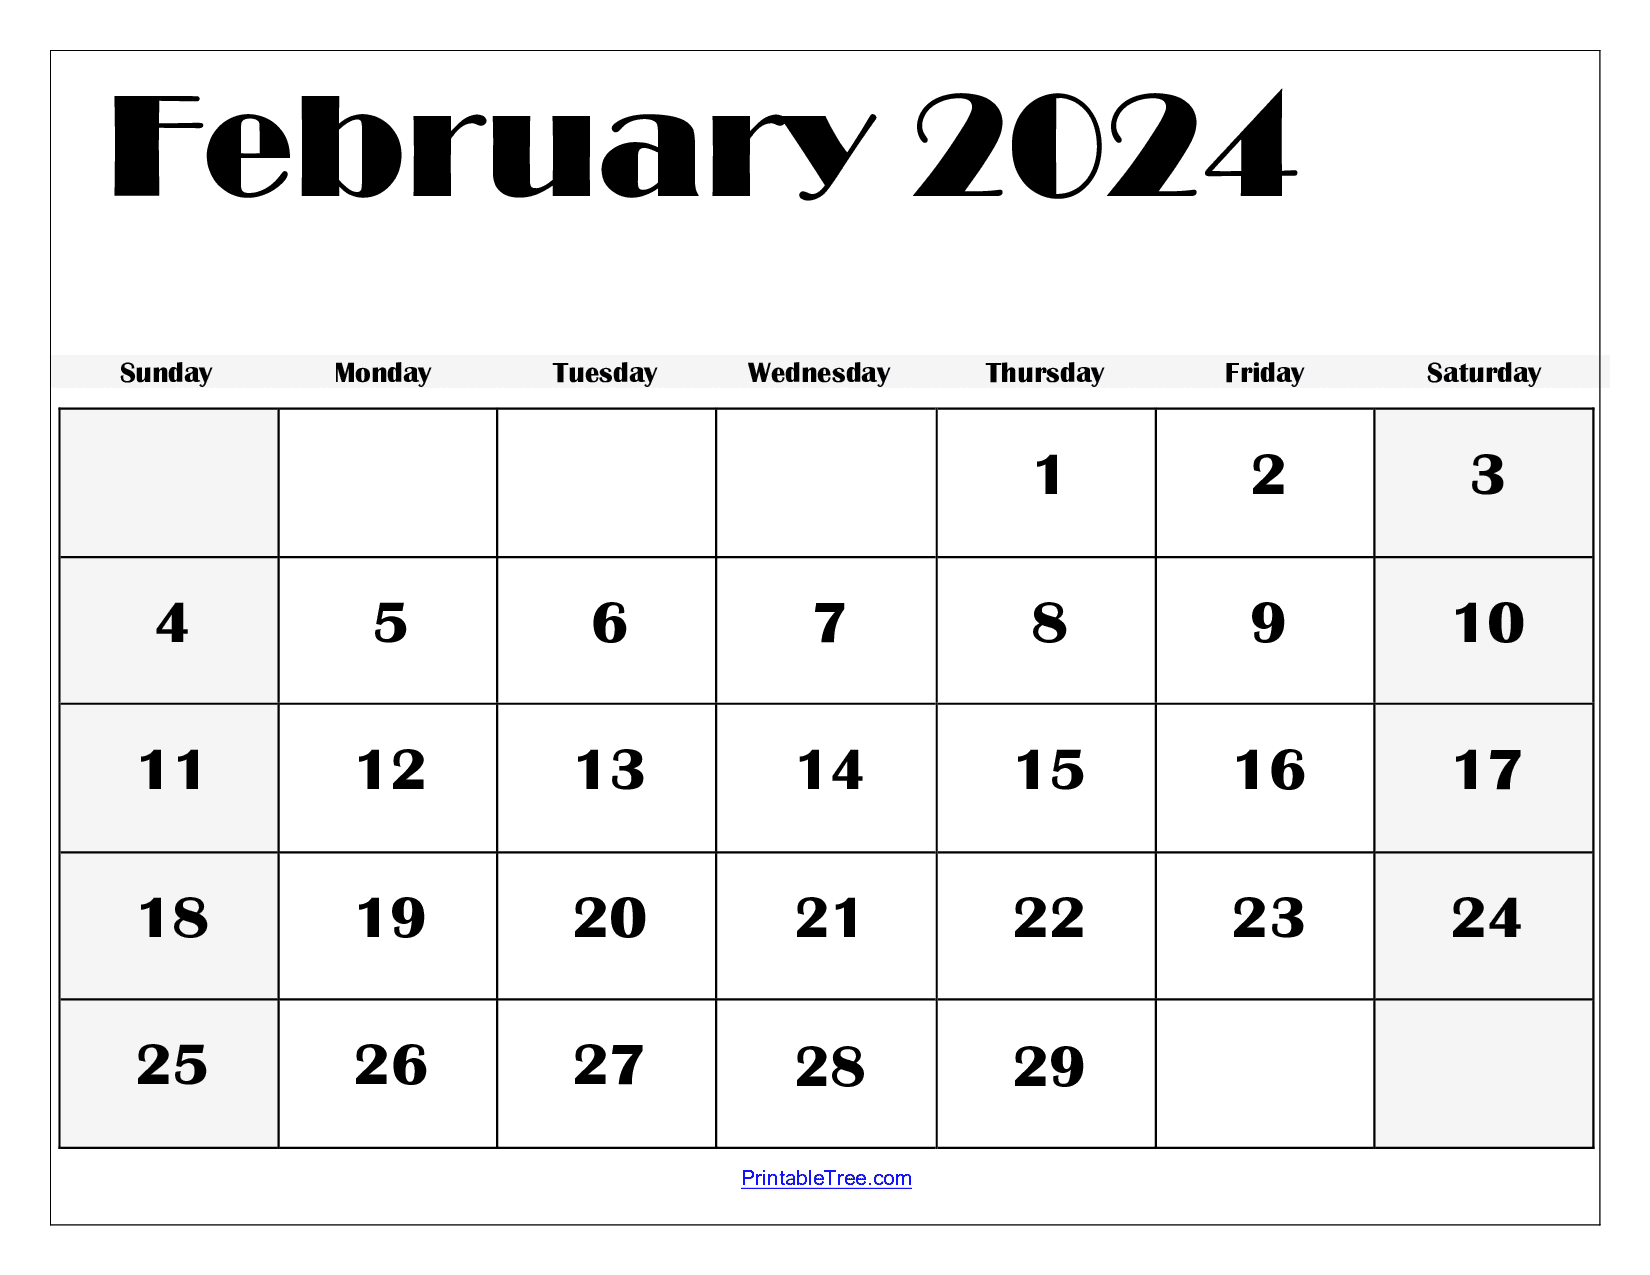 February 2024 Calendar Printable Pdf Template With Holidays for February Monthly Calendar 2024 Printable